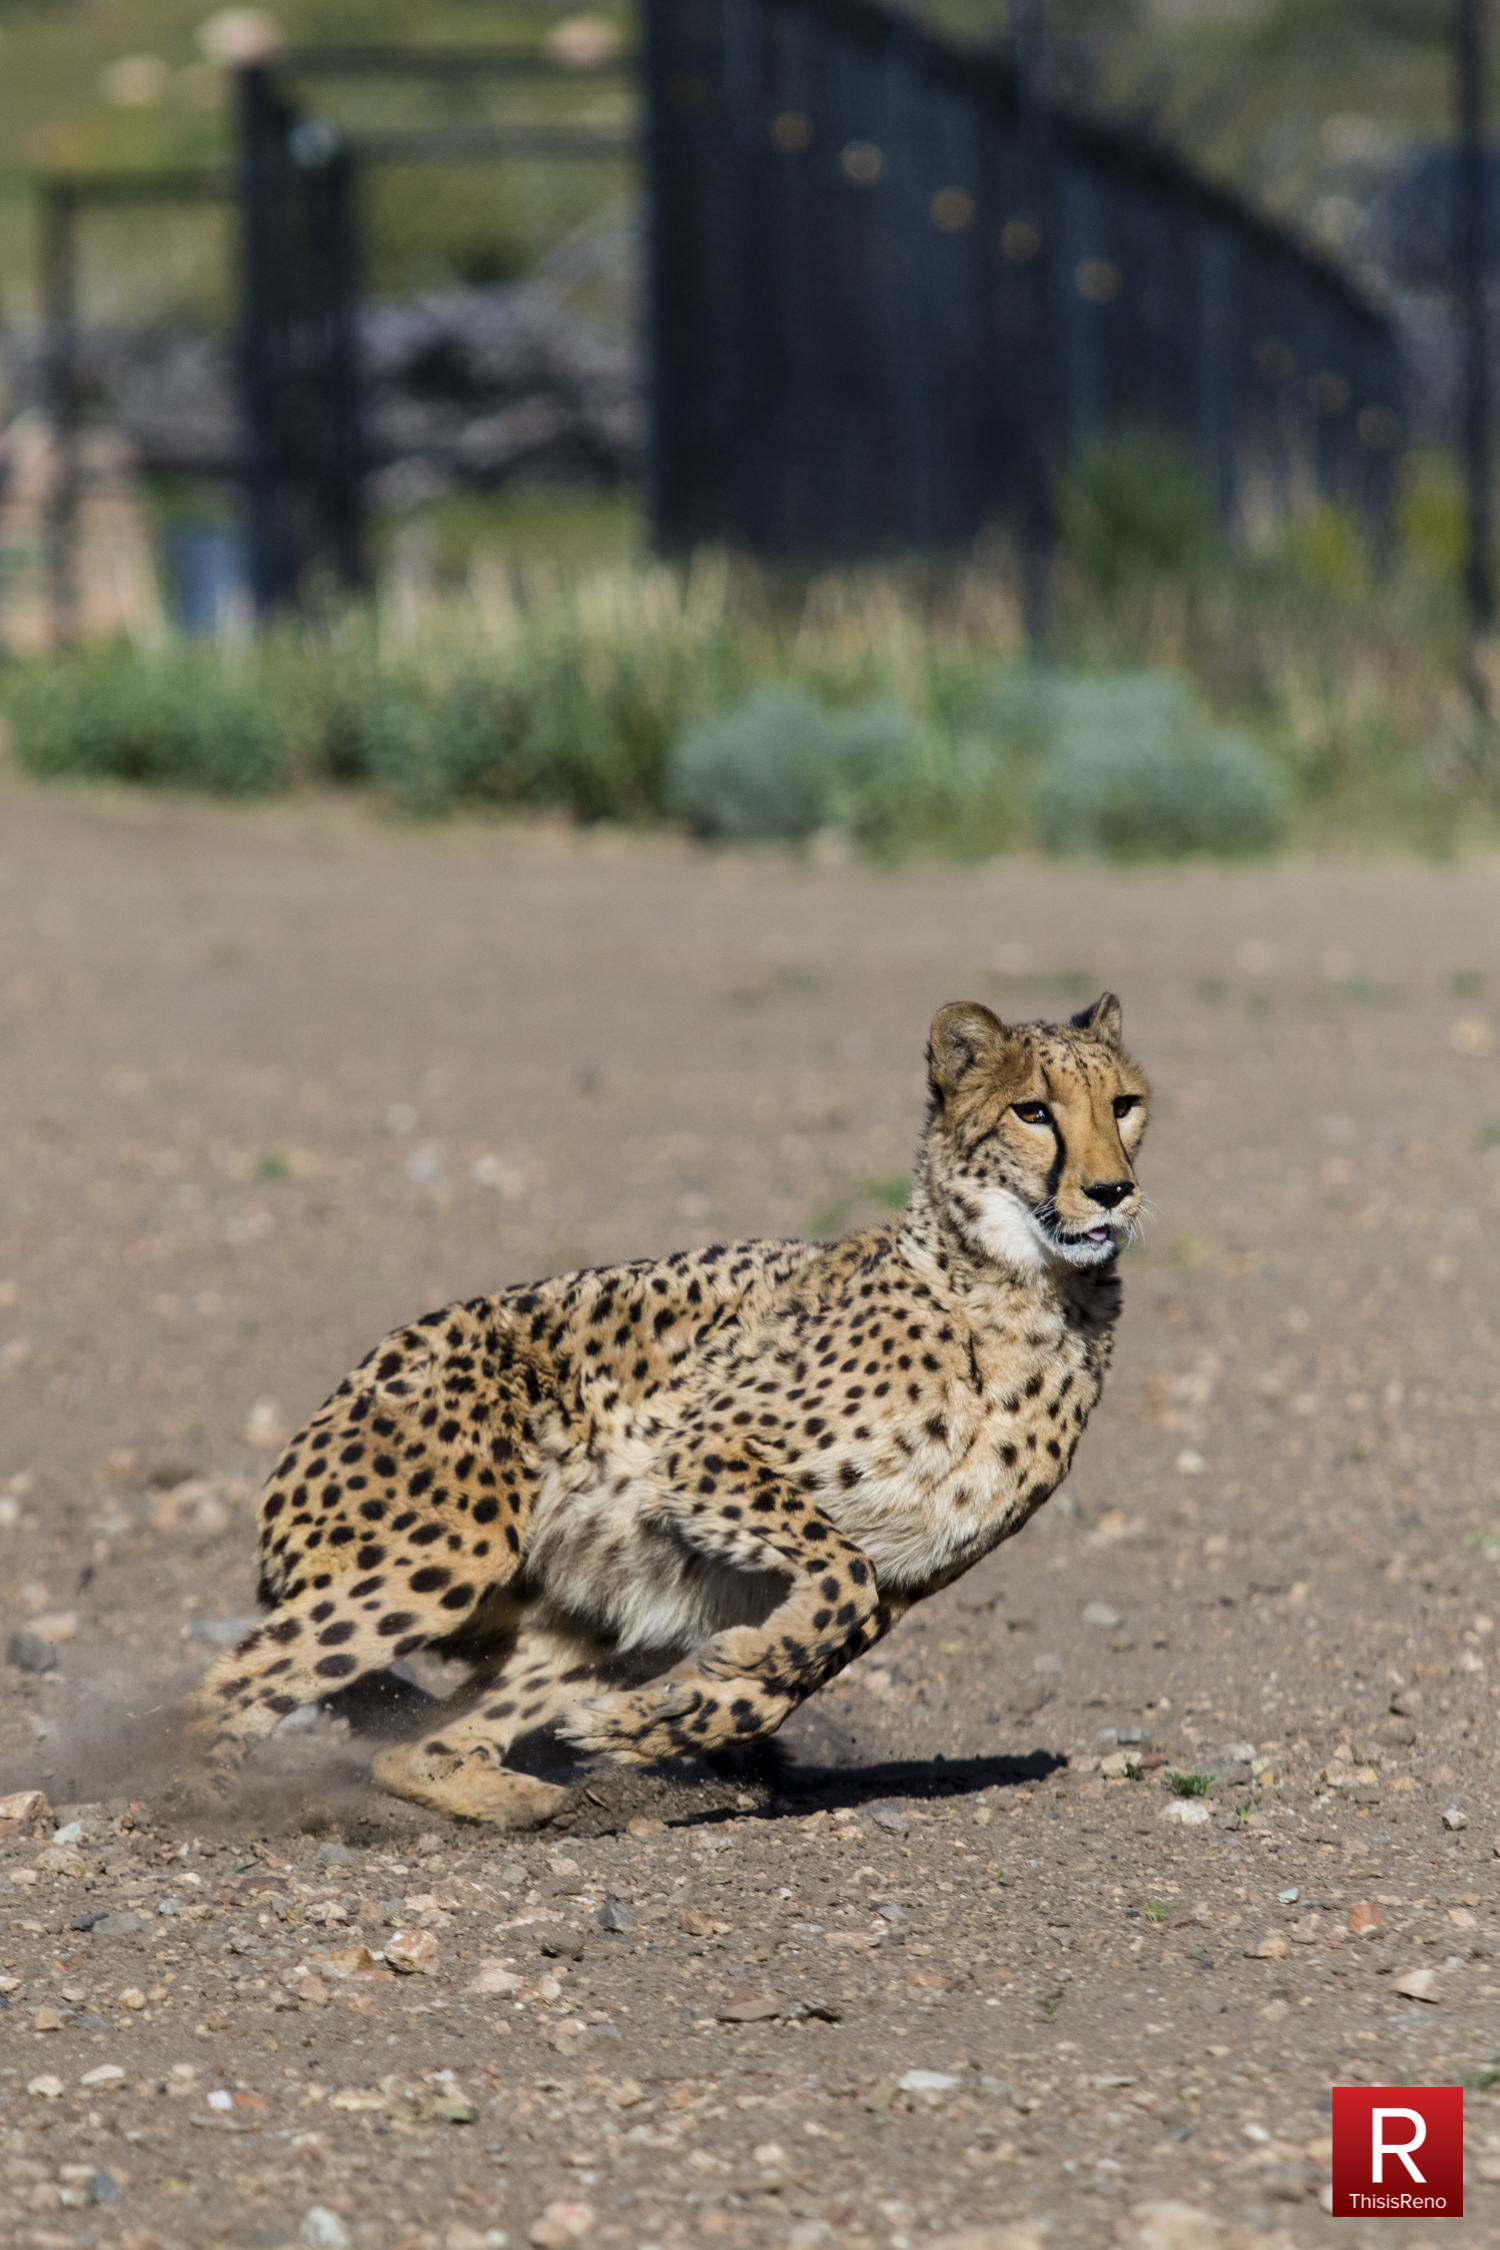 PHOTOS: Full Speed Cheetahs at Animal Ark Sanctuary